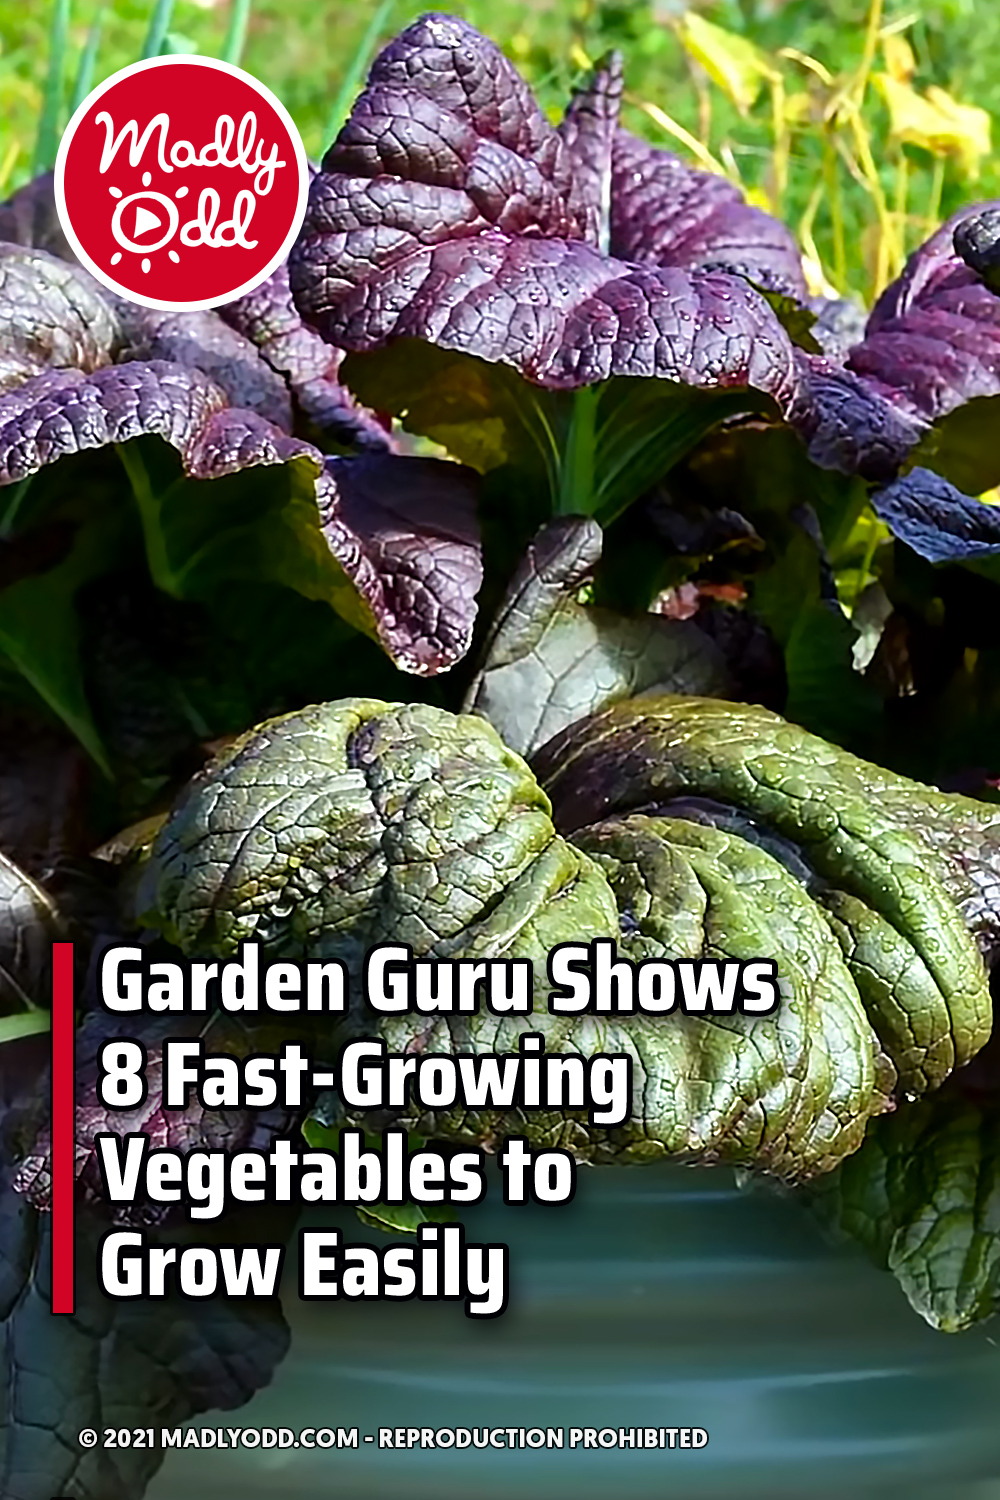 Garden Guru Shows 8 Fast-Growing Vegetables to Grow Easily